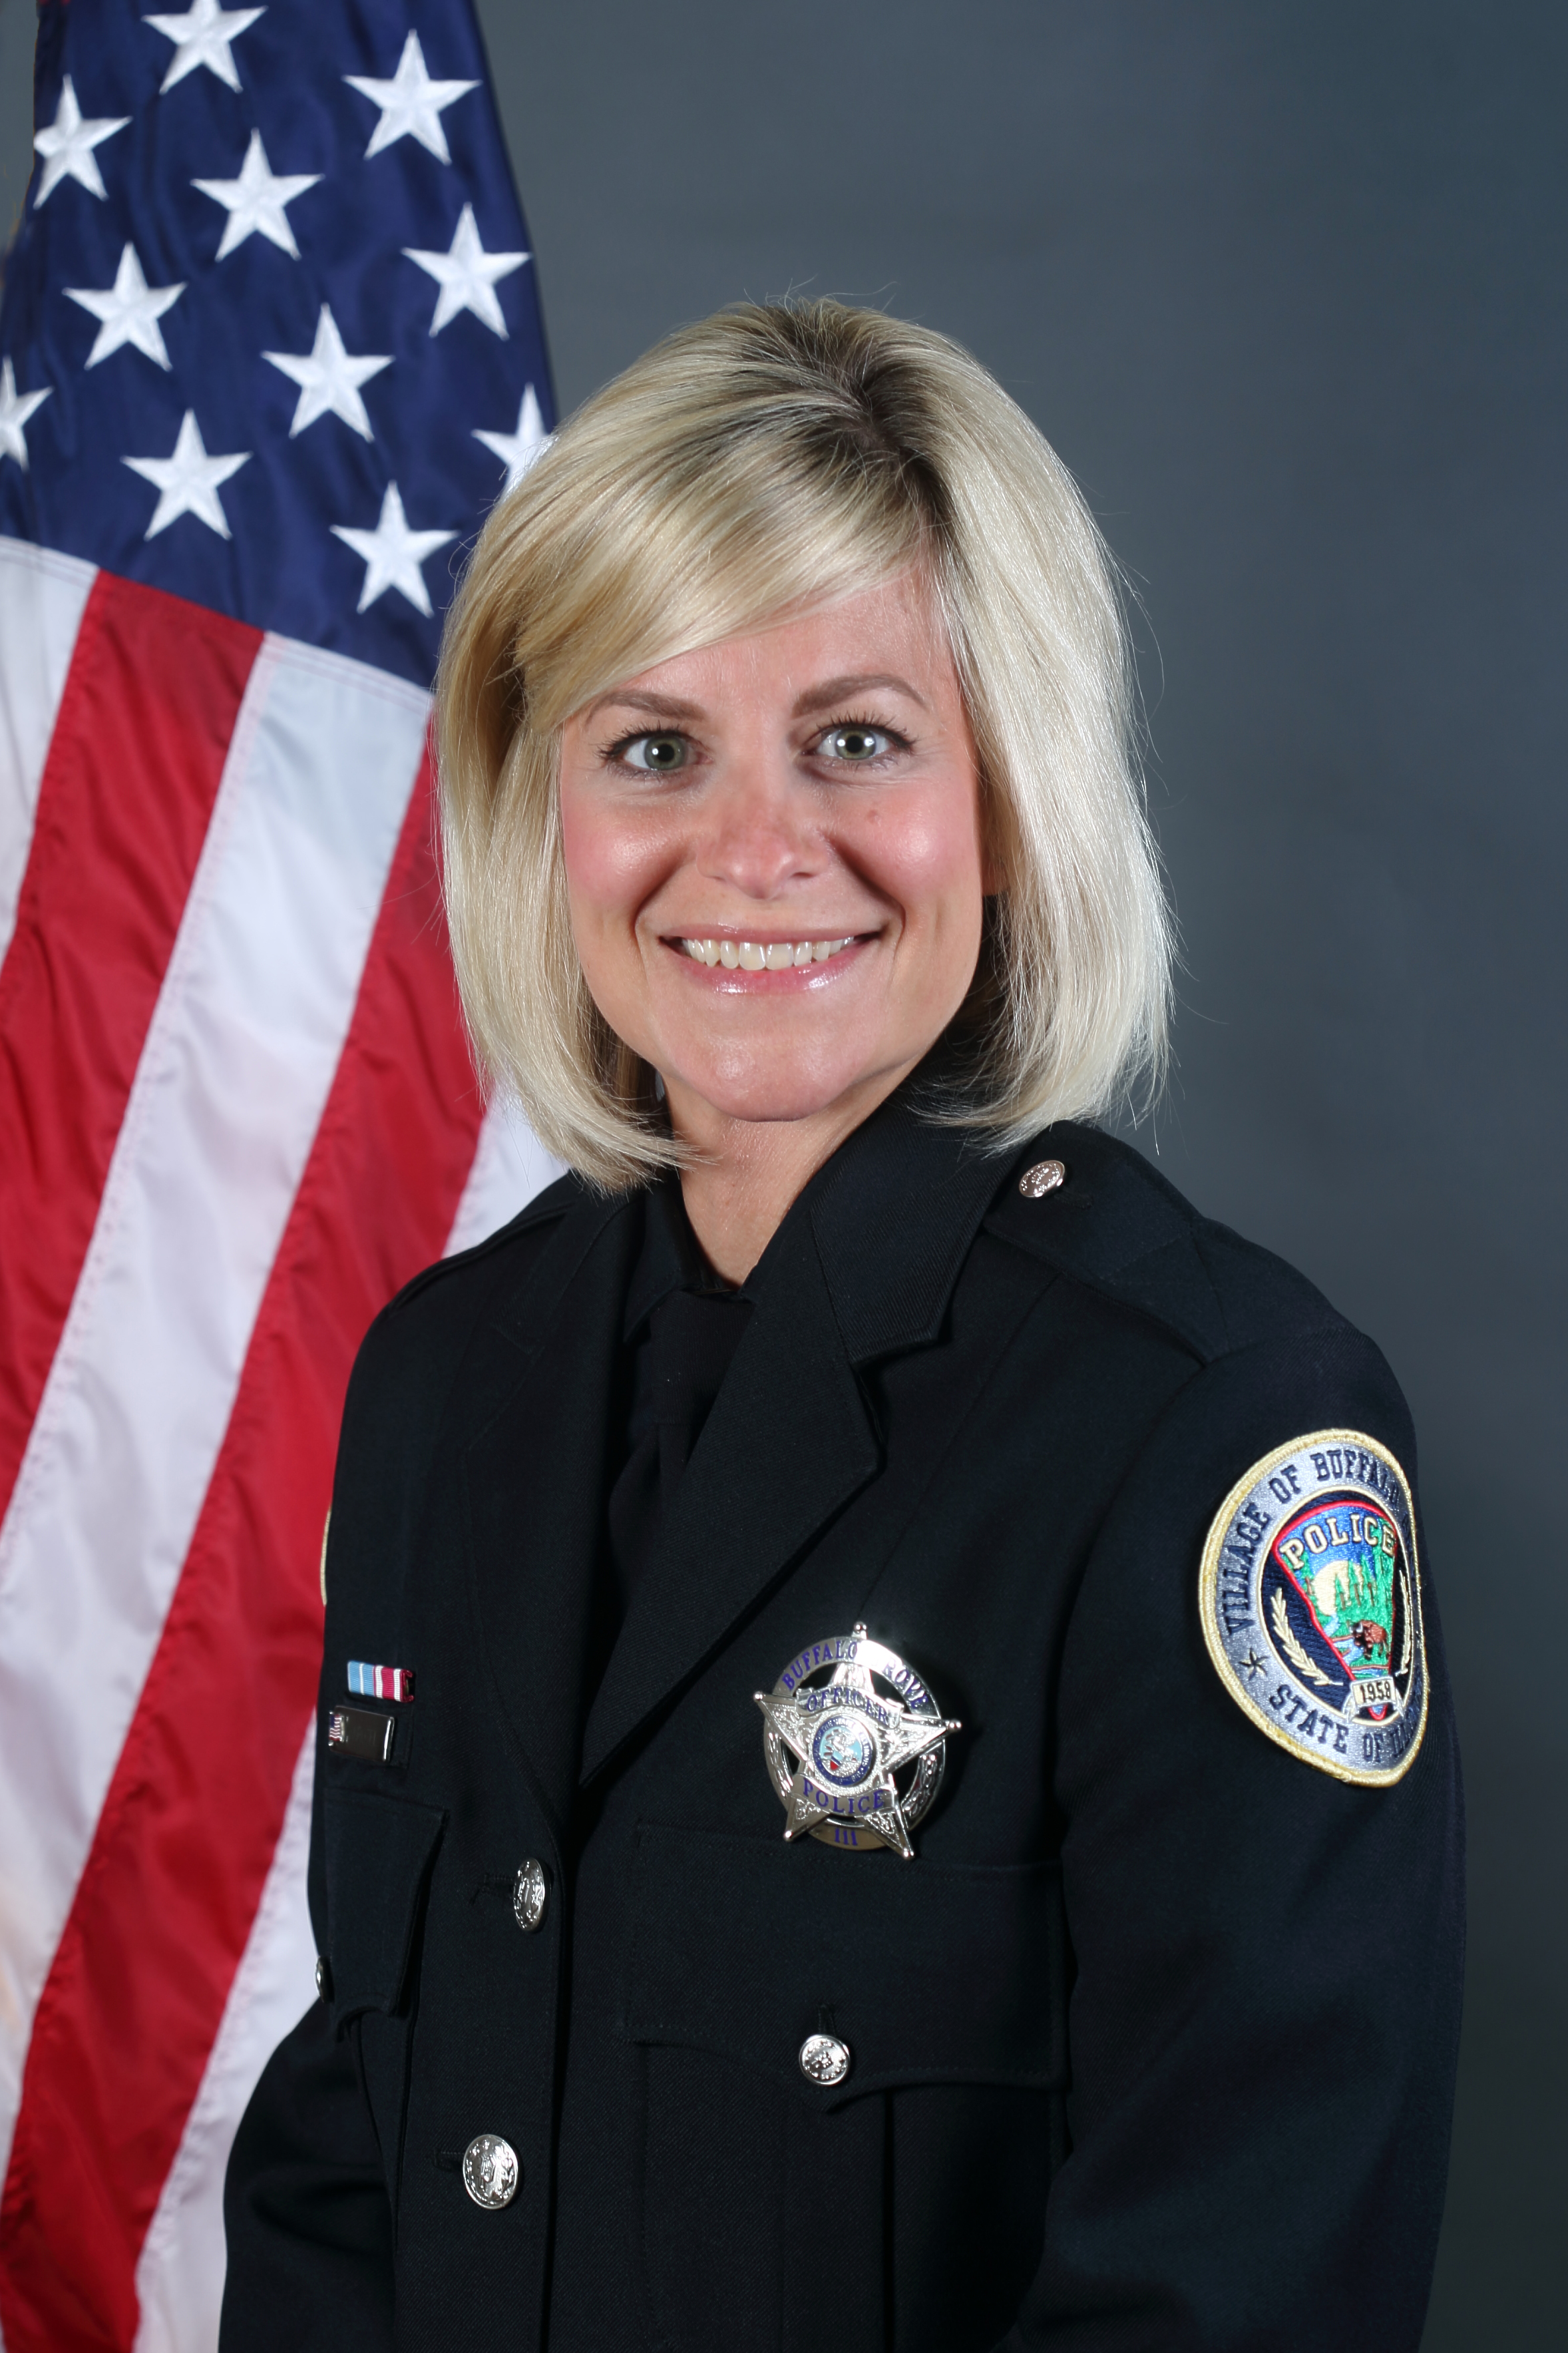 Officer Ashley Krozel